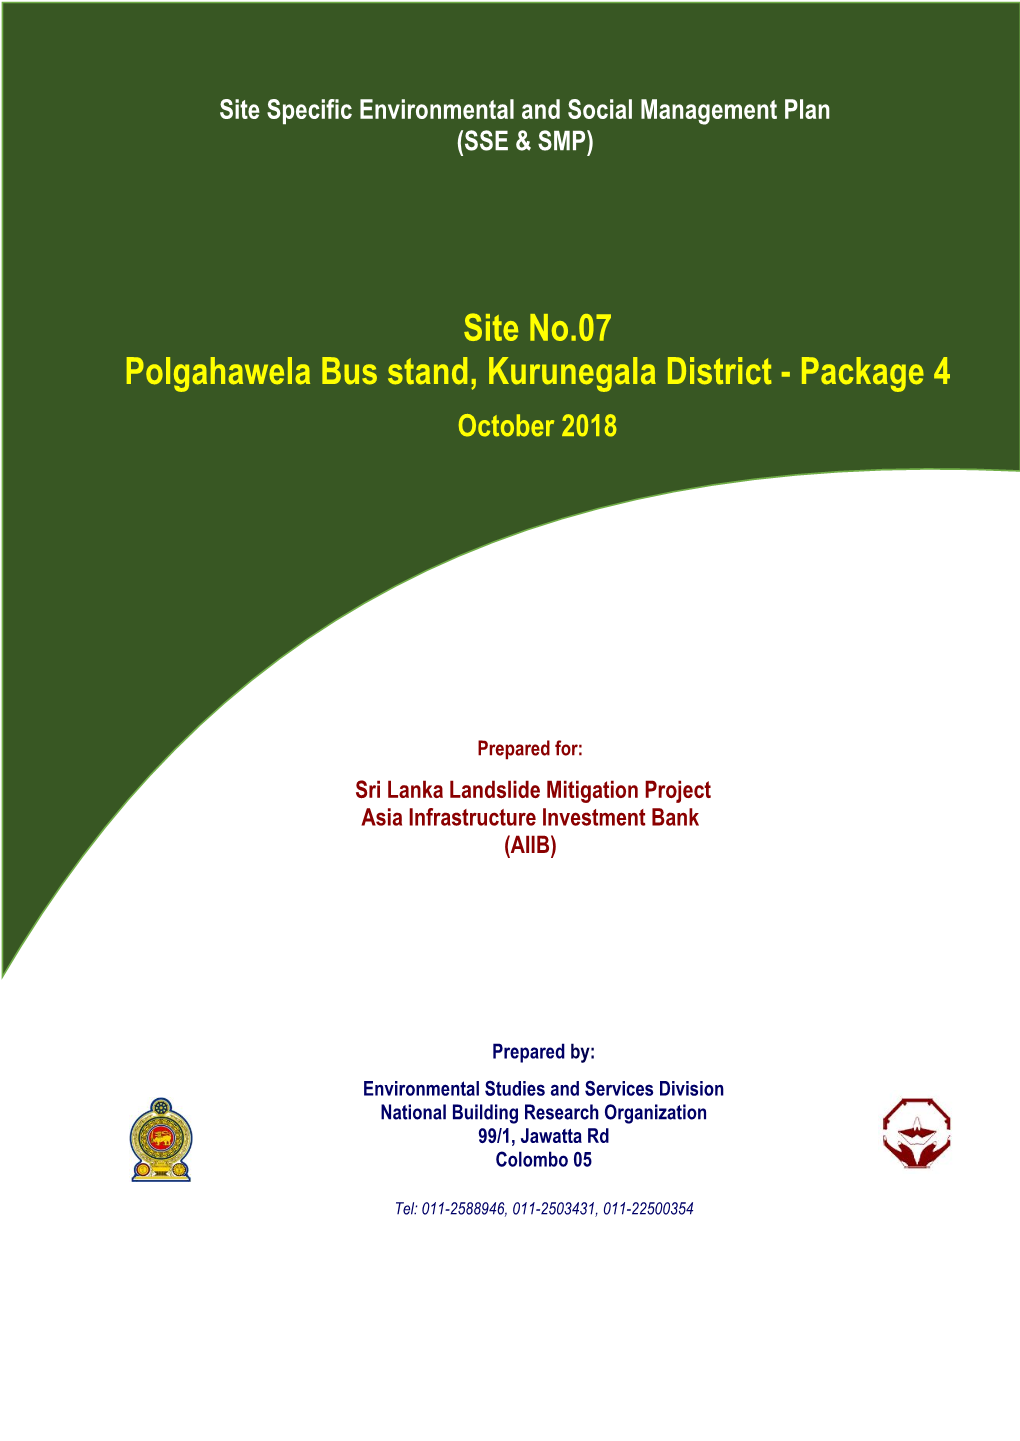 Polgahawela Bus Stand, Kurunegala District - Package 4